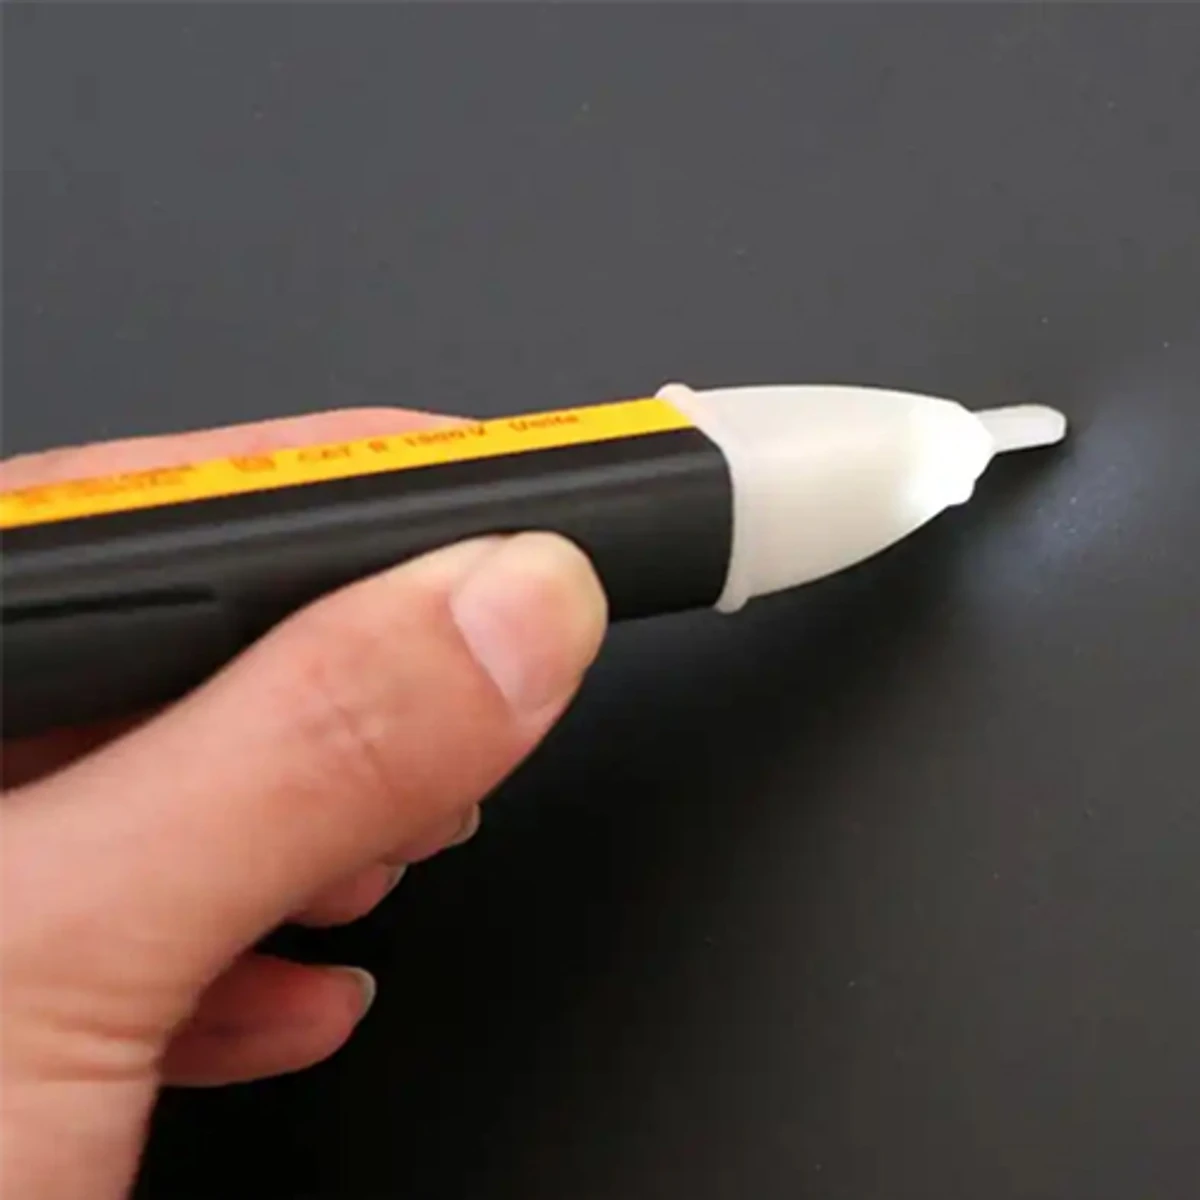 AC]]DC]]Voltage Tester Pen [90/1000V with LED Flashlight and sensor]]]]RRI